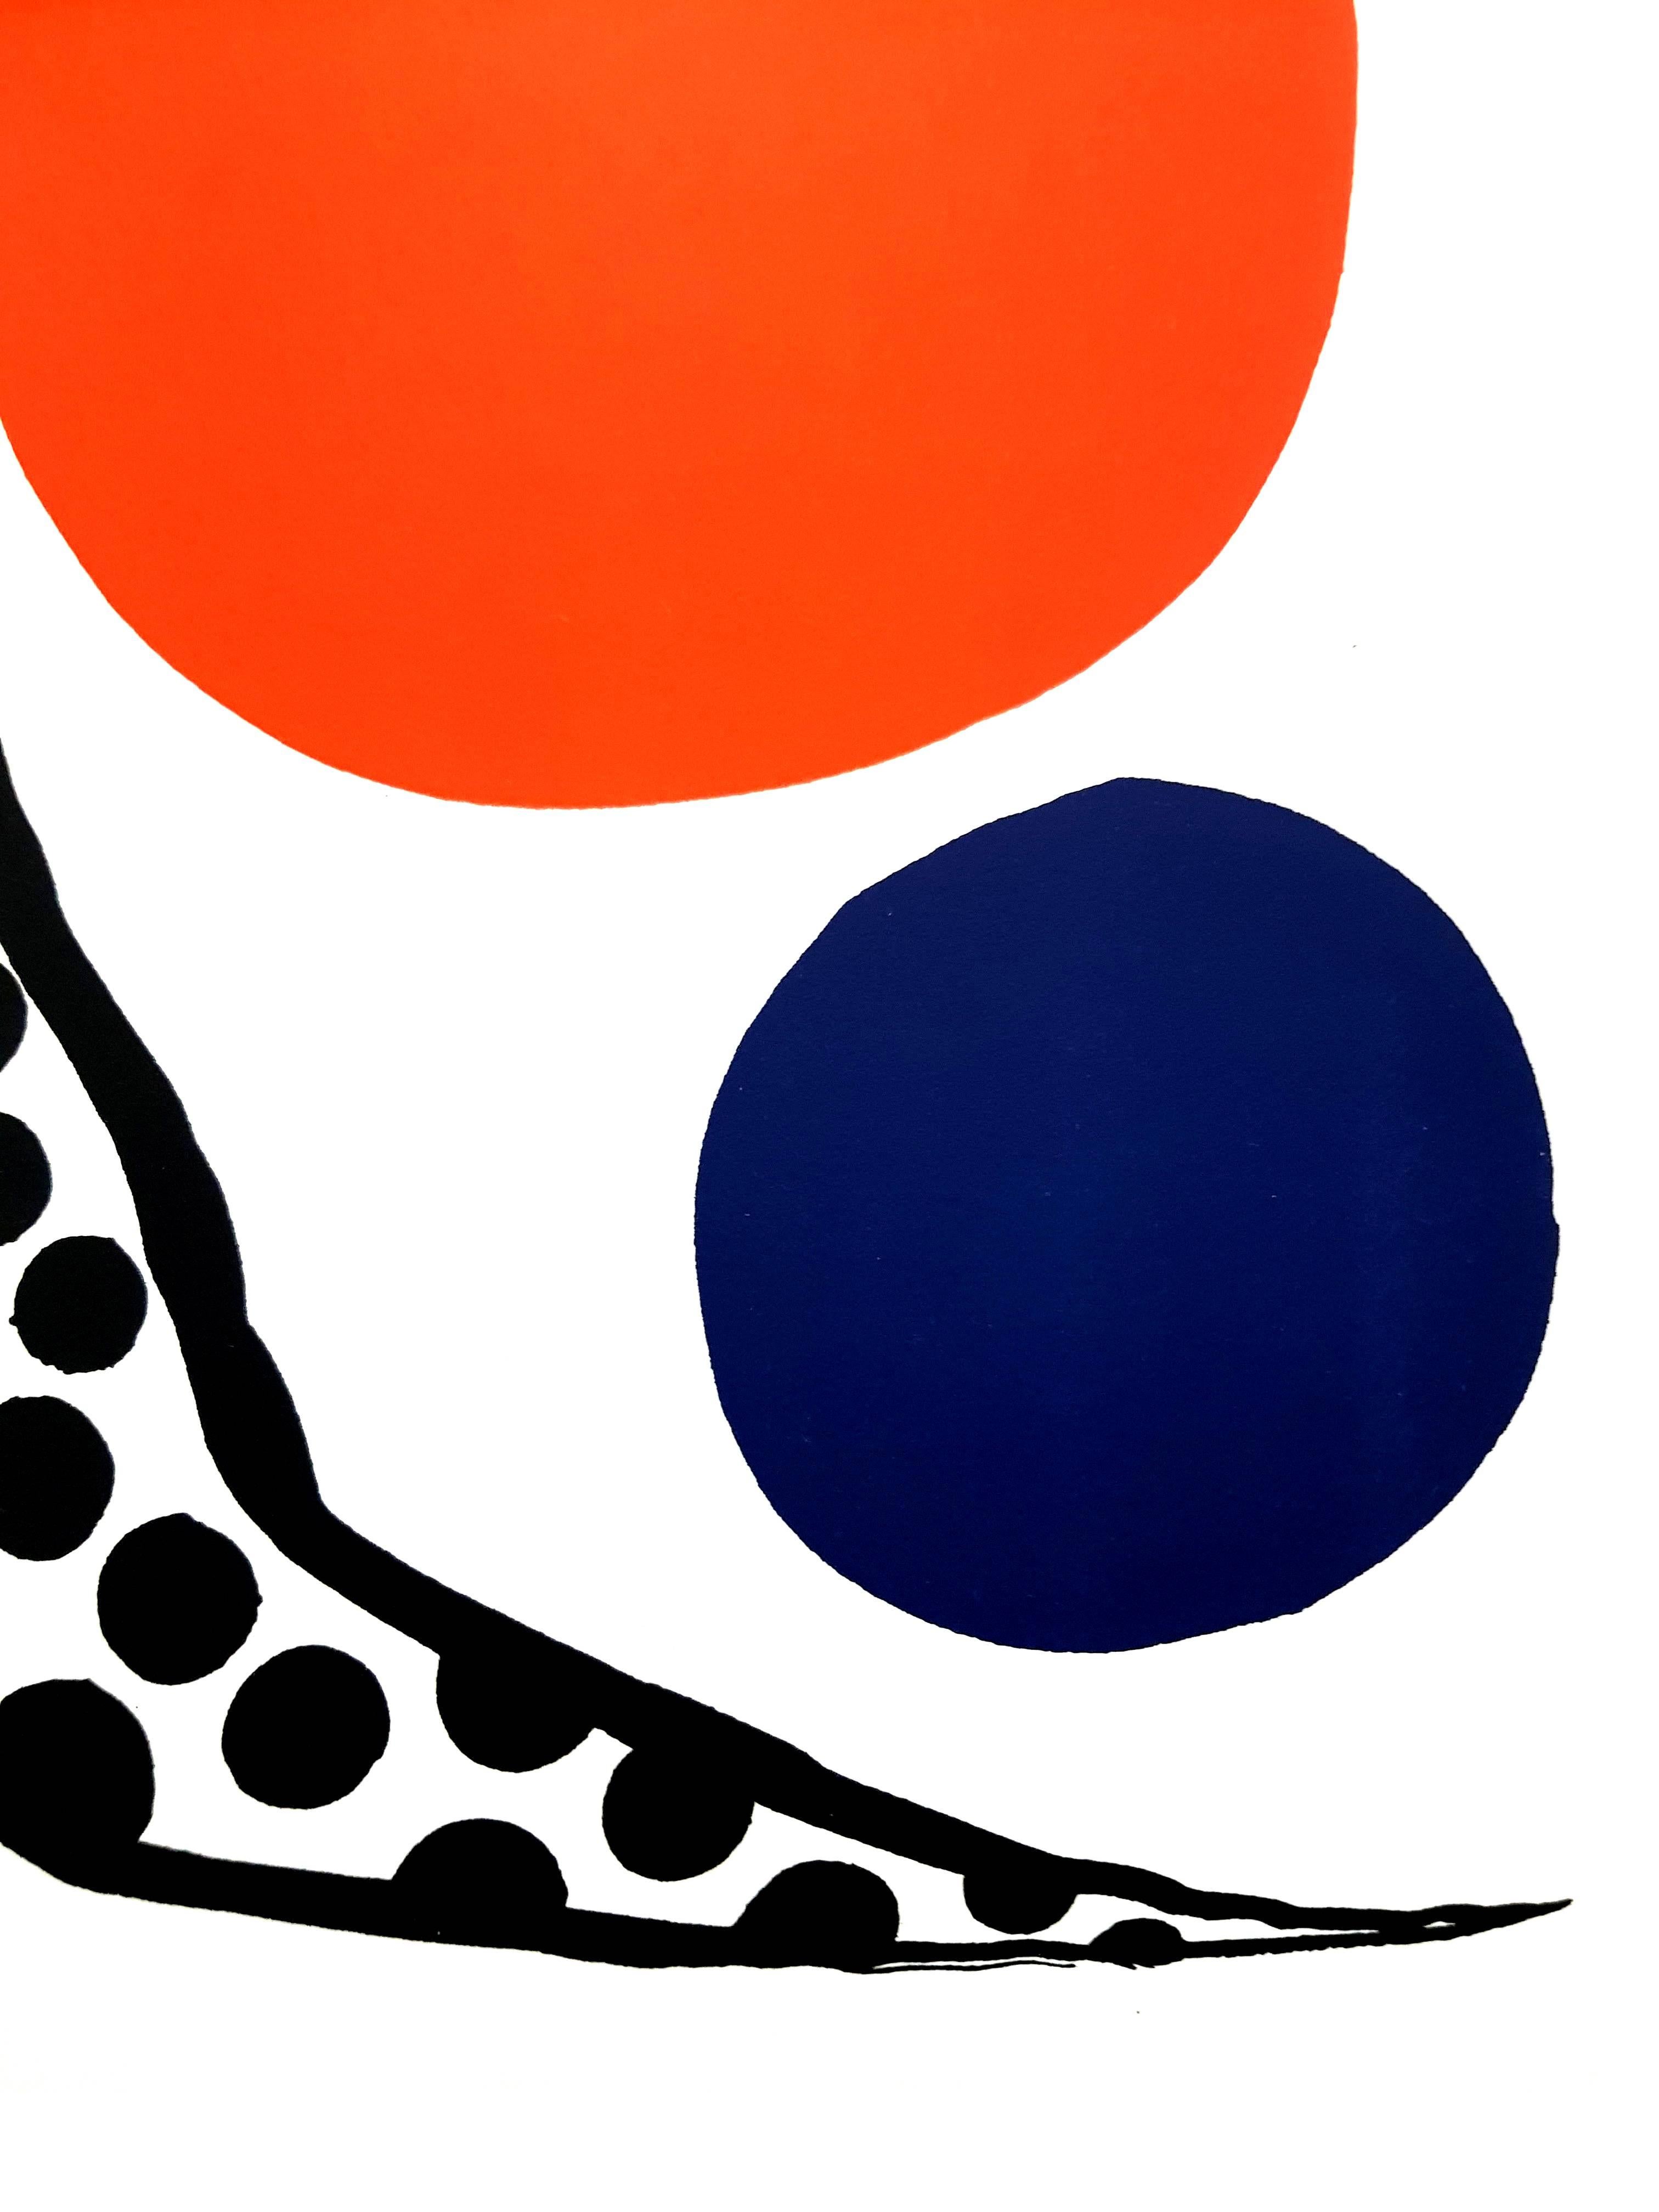 Alexander Calder - Original Lithograph - Composition
1964
Dimensions: 30 x 20 cm
Edition of 200 (one of the 200 on Vélin de Rives)
Mourlot Press, 1964

Alexander Calder (1898 - 1976)

The American artist Alexander Calder was born in Philadelphia in